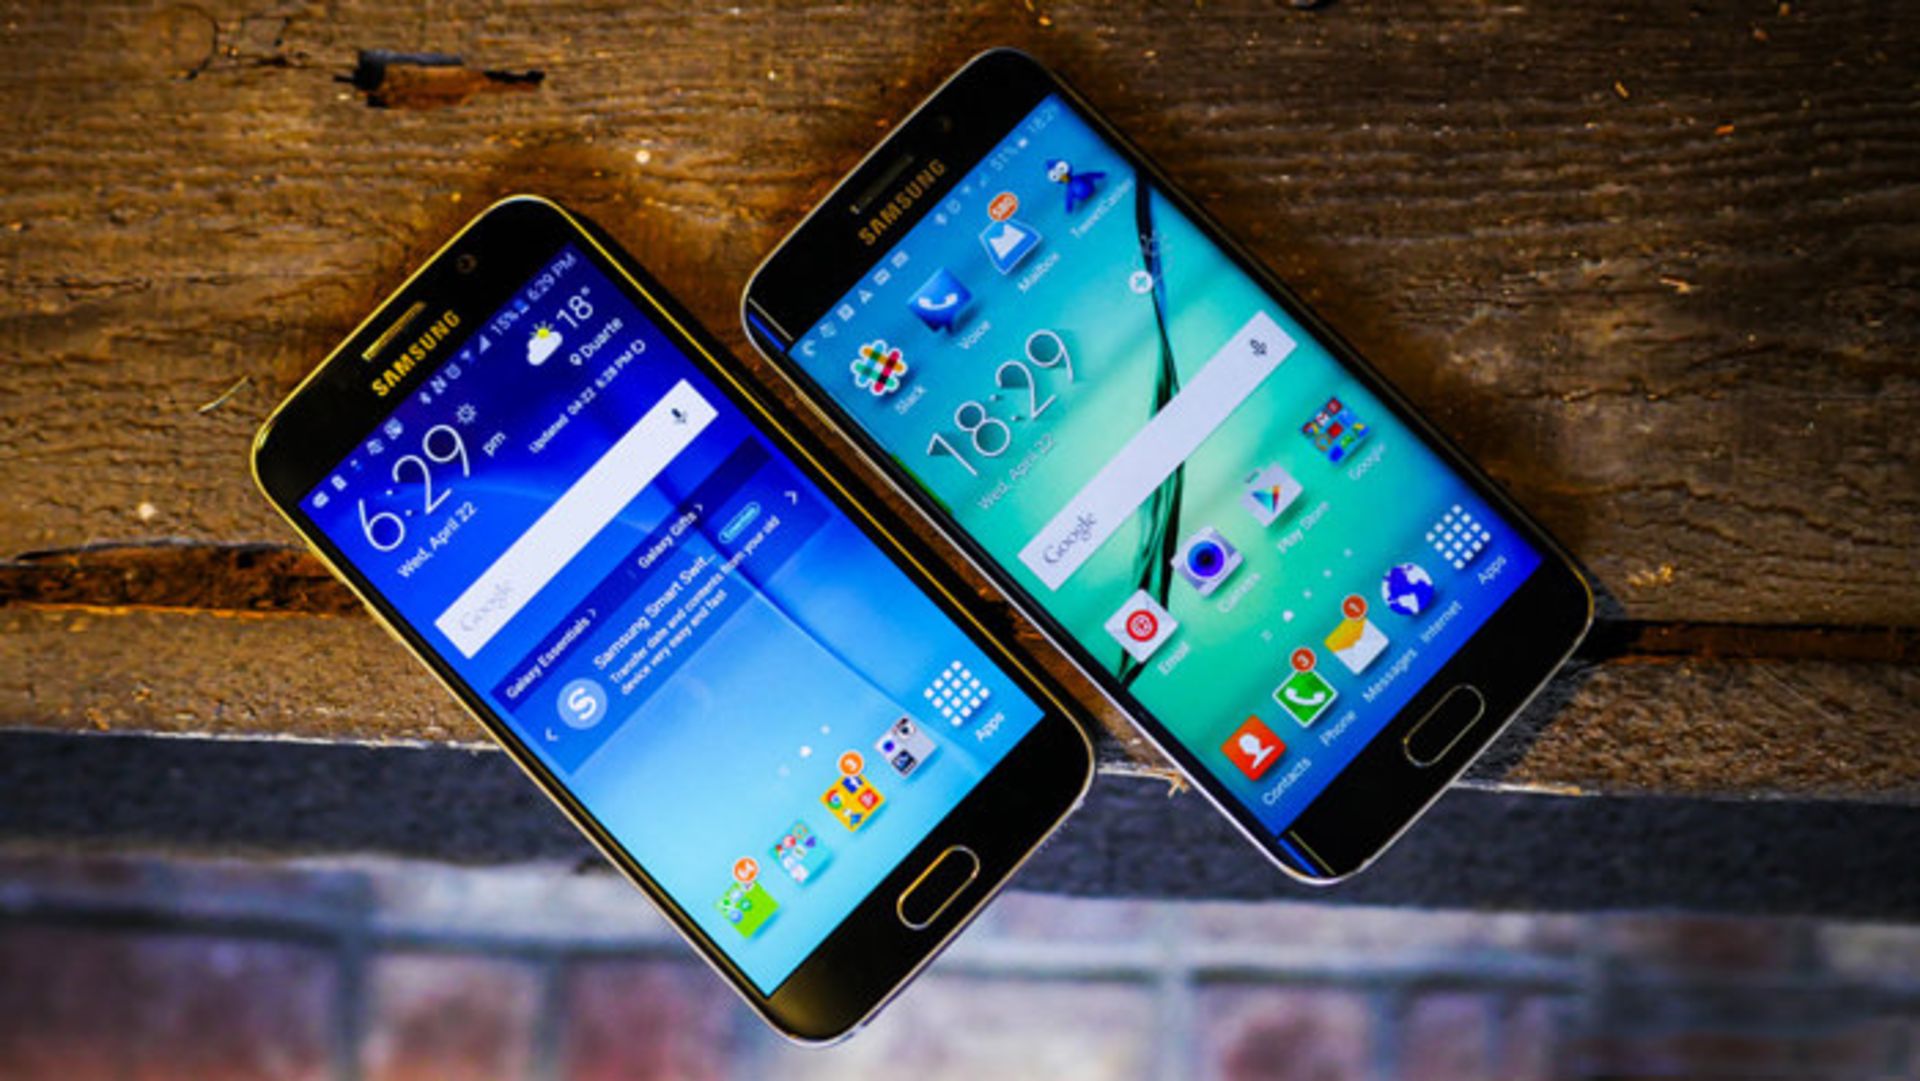 مرجع متخصصين ايران نماي جلو از گلكسي اس 6 / Galaxy S6 و گلكسي اس 6 اج / Galaxy S6 Edge سامسونگ / Samsung